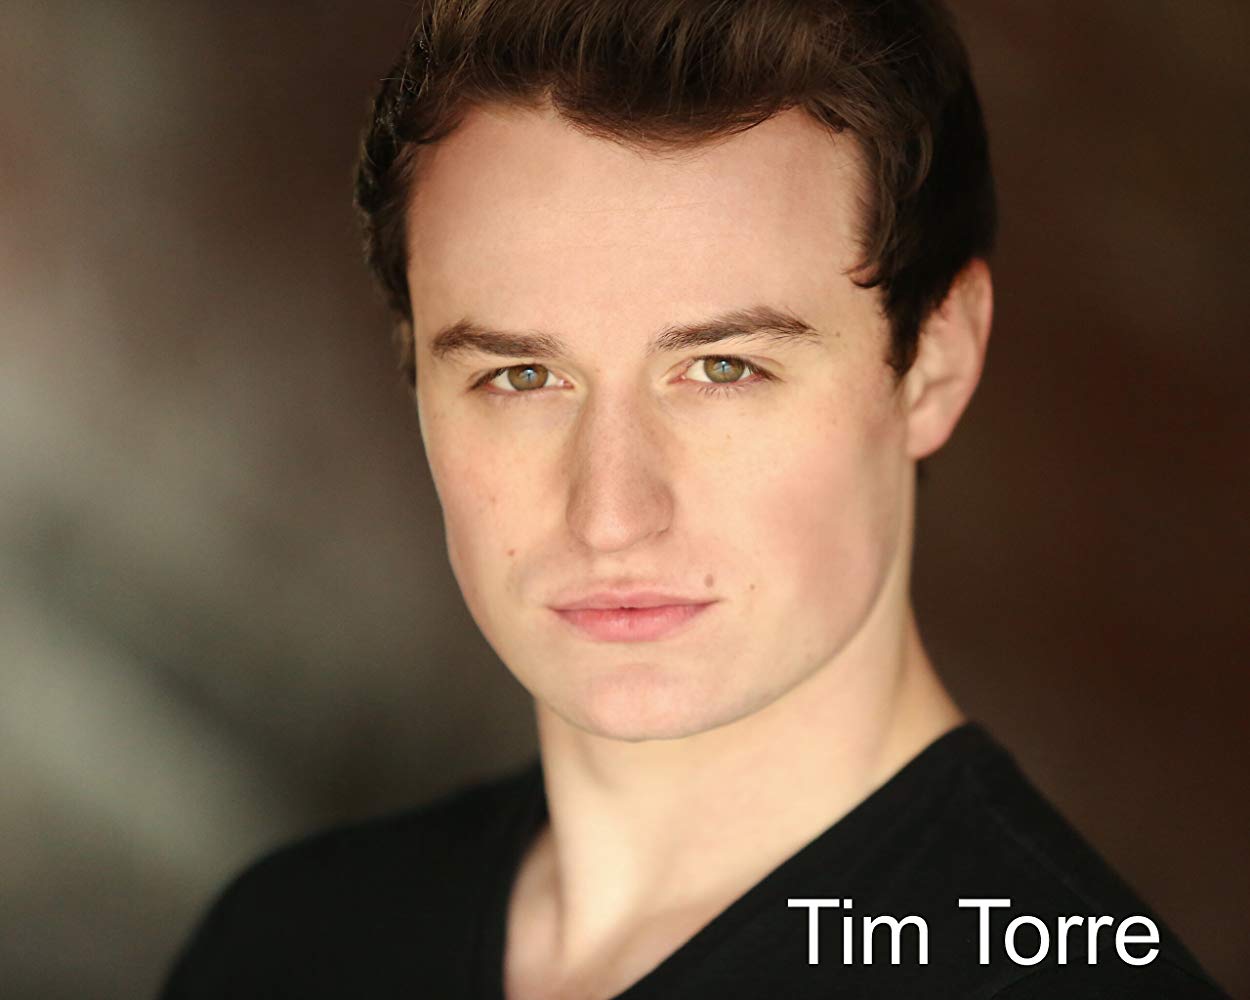 Tim Torre